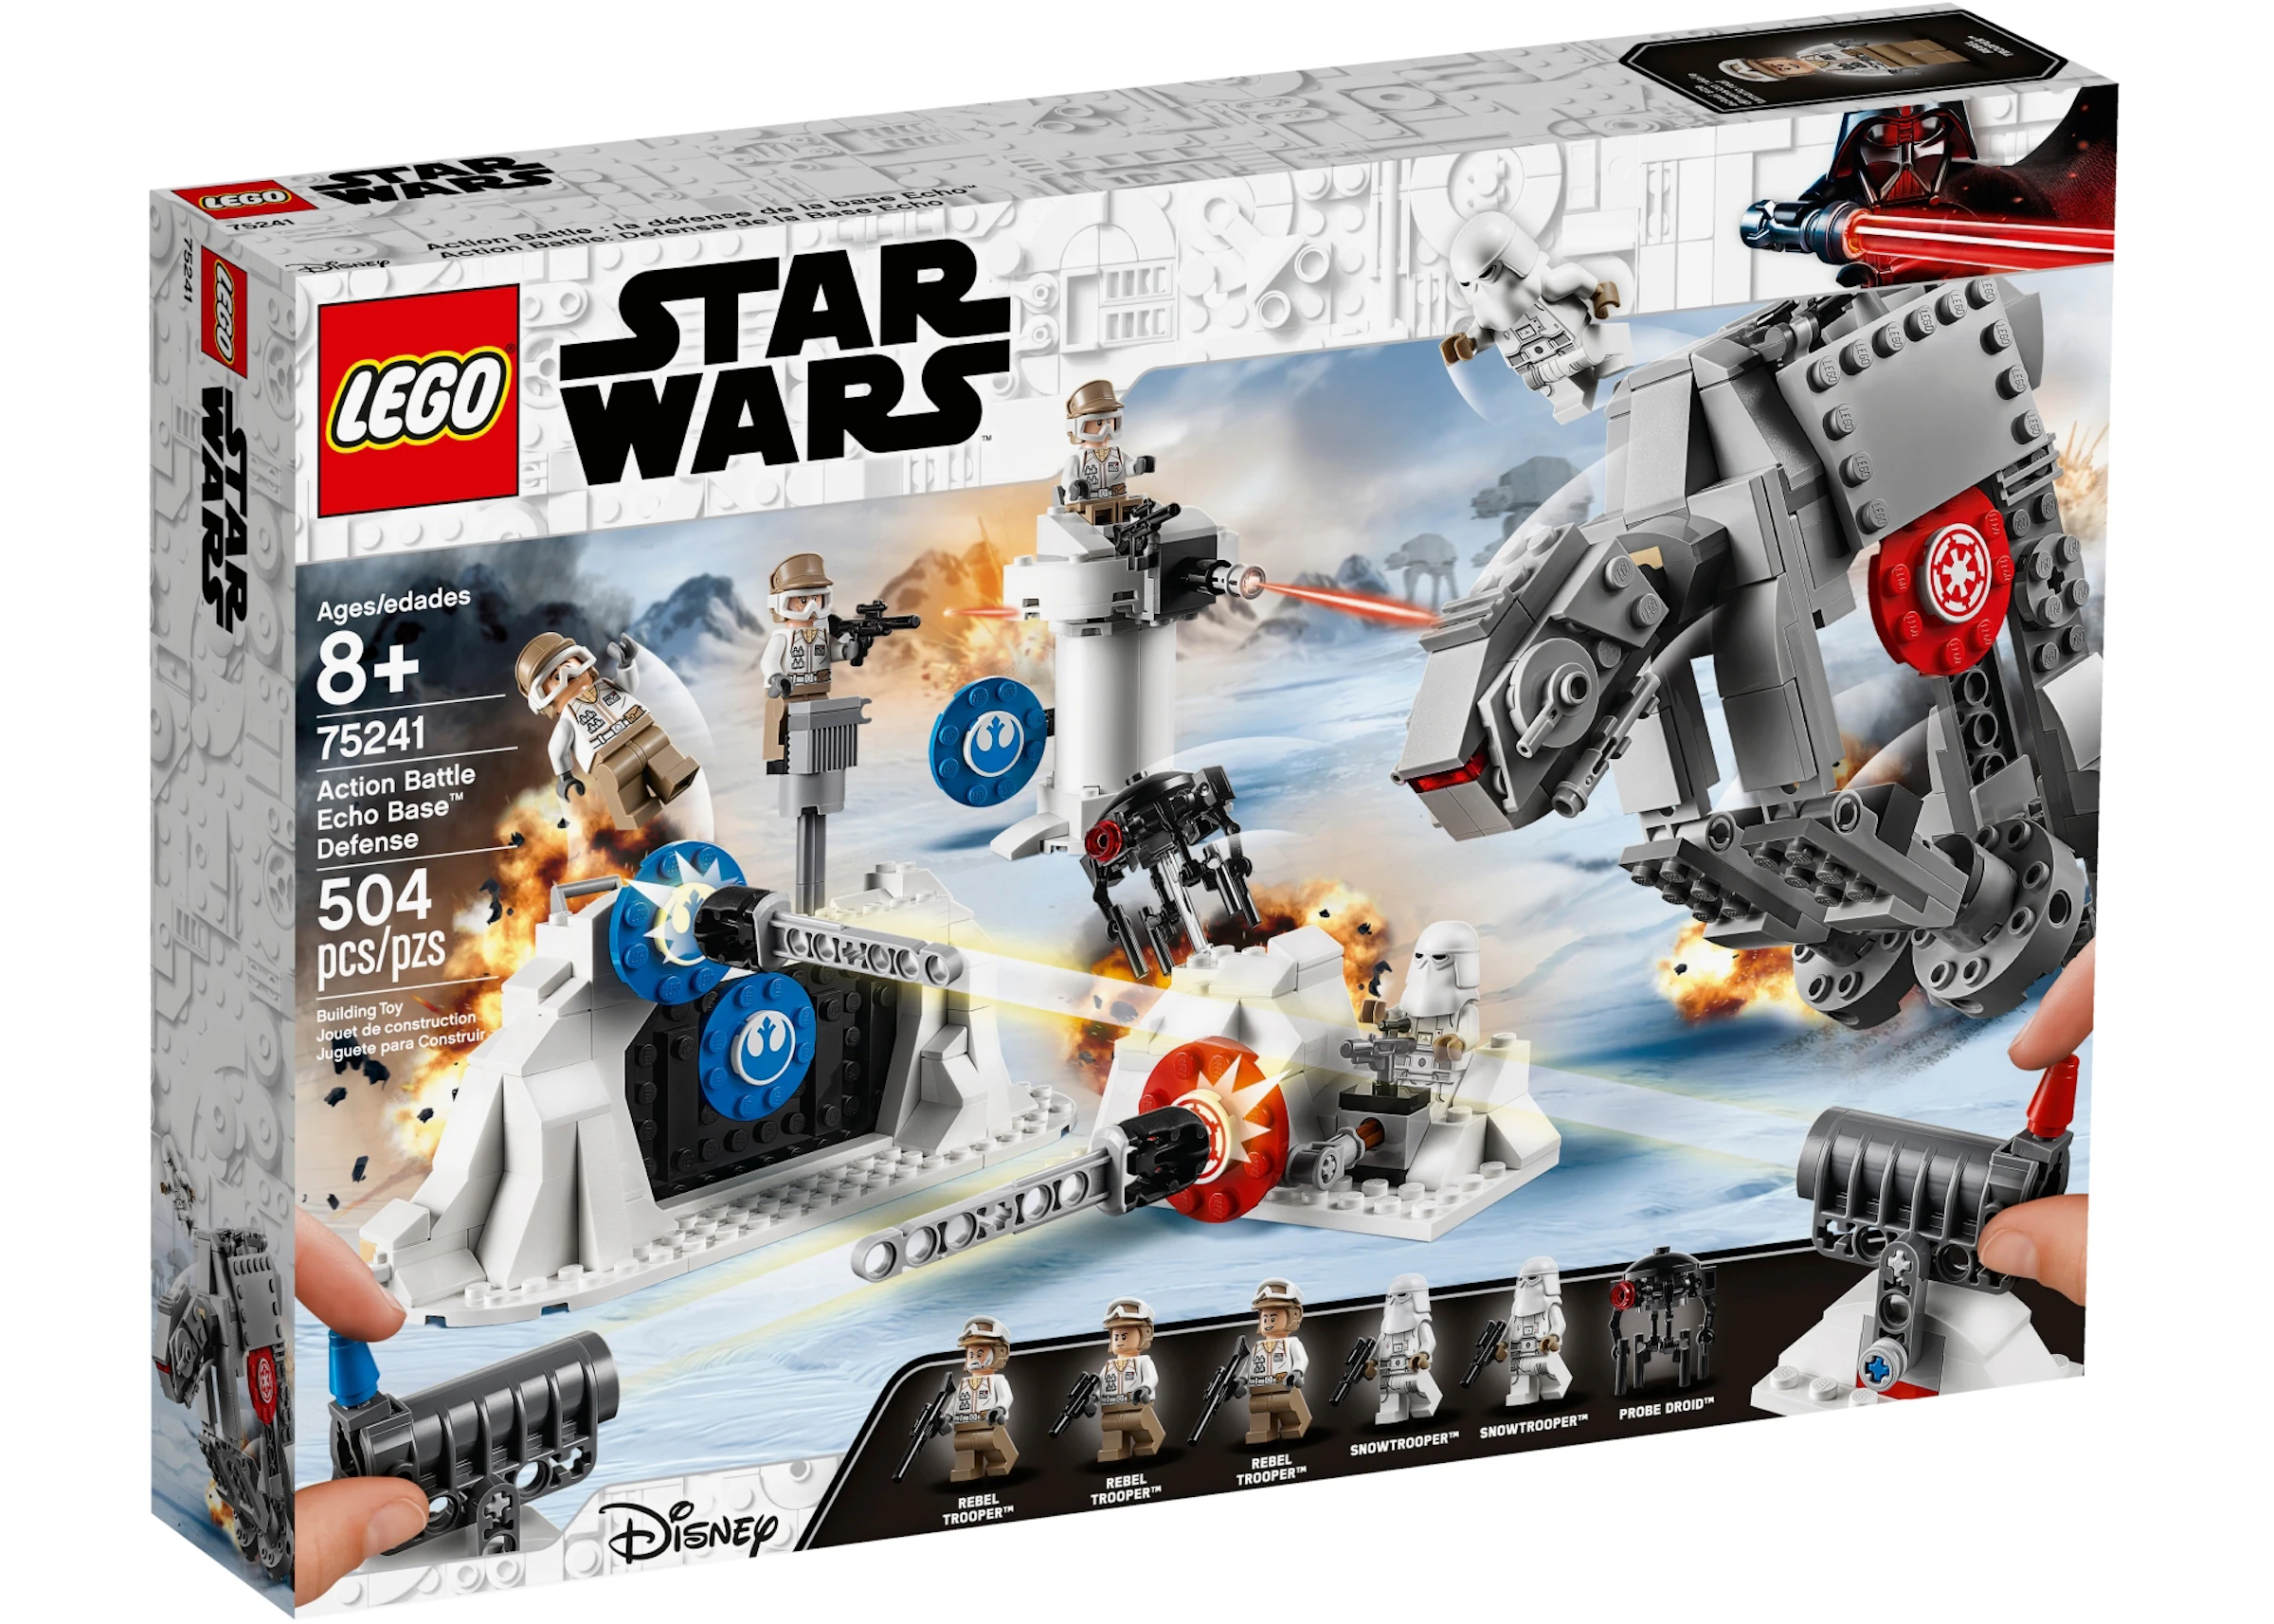 LEGO Wars Action Battle Echo Base Defense Set 75241 - US